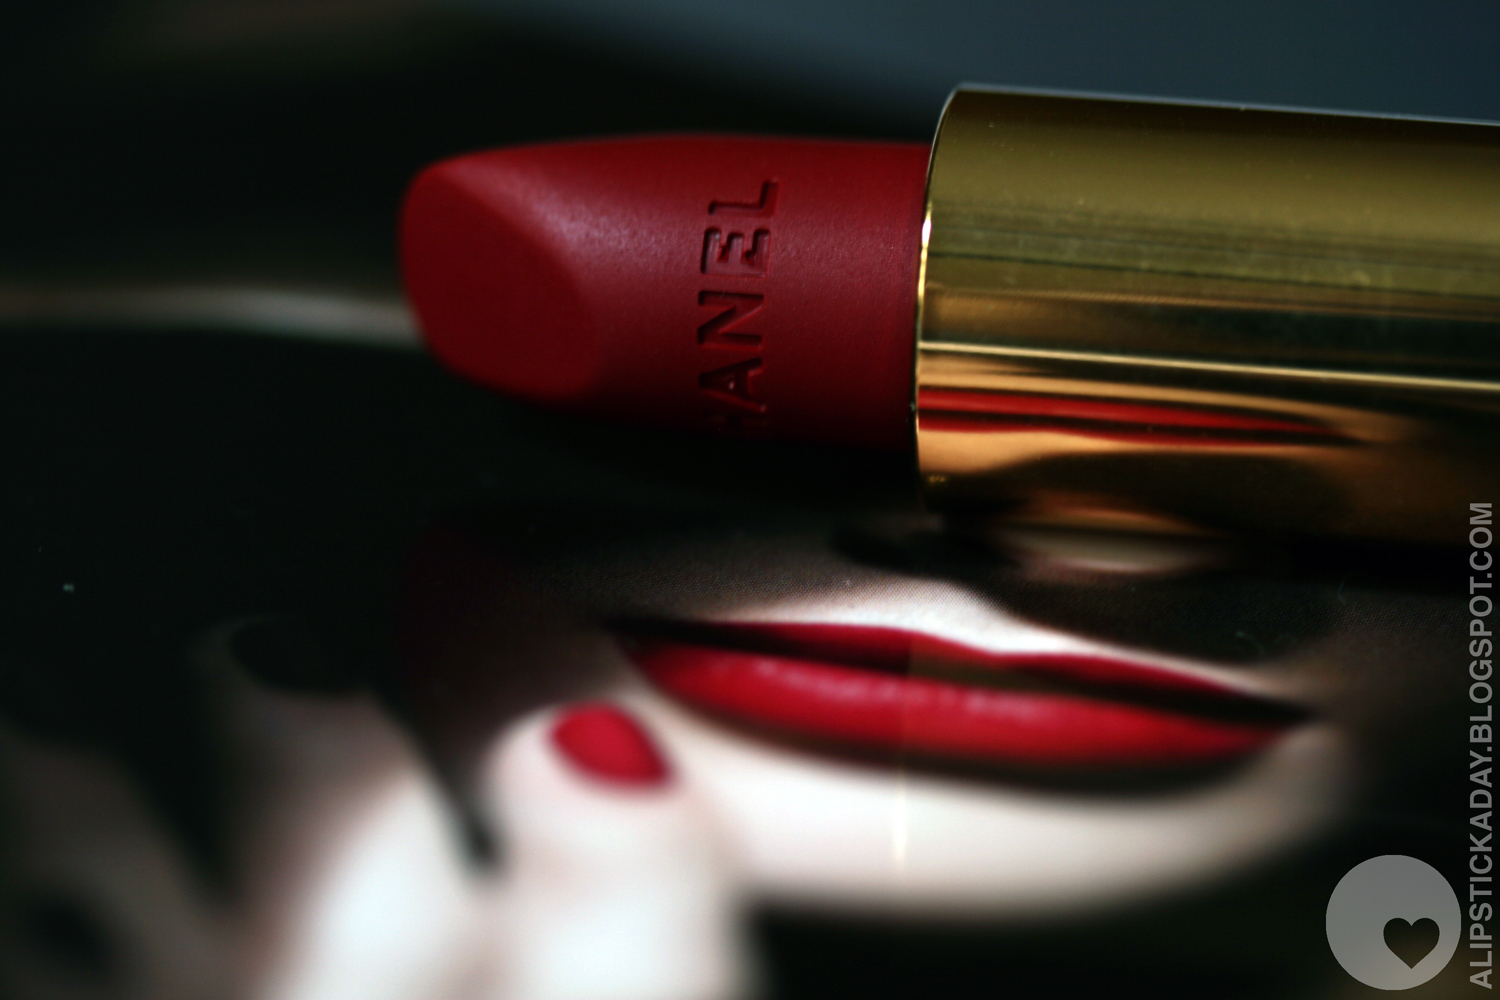 A LIPSTICK A DAY: Lipstick of the day #15 - Chanel Rouge Allure Velvet in  La Fascinante #38